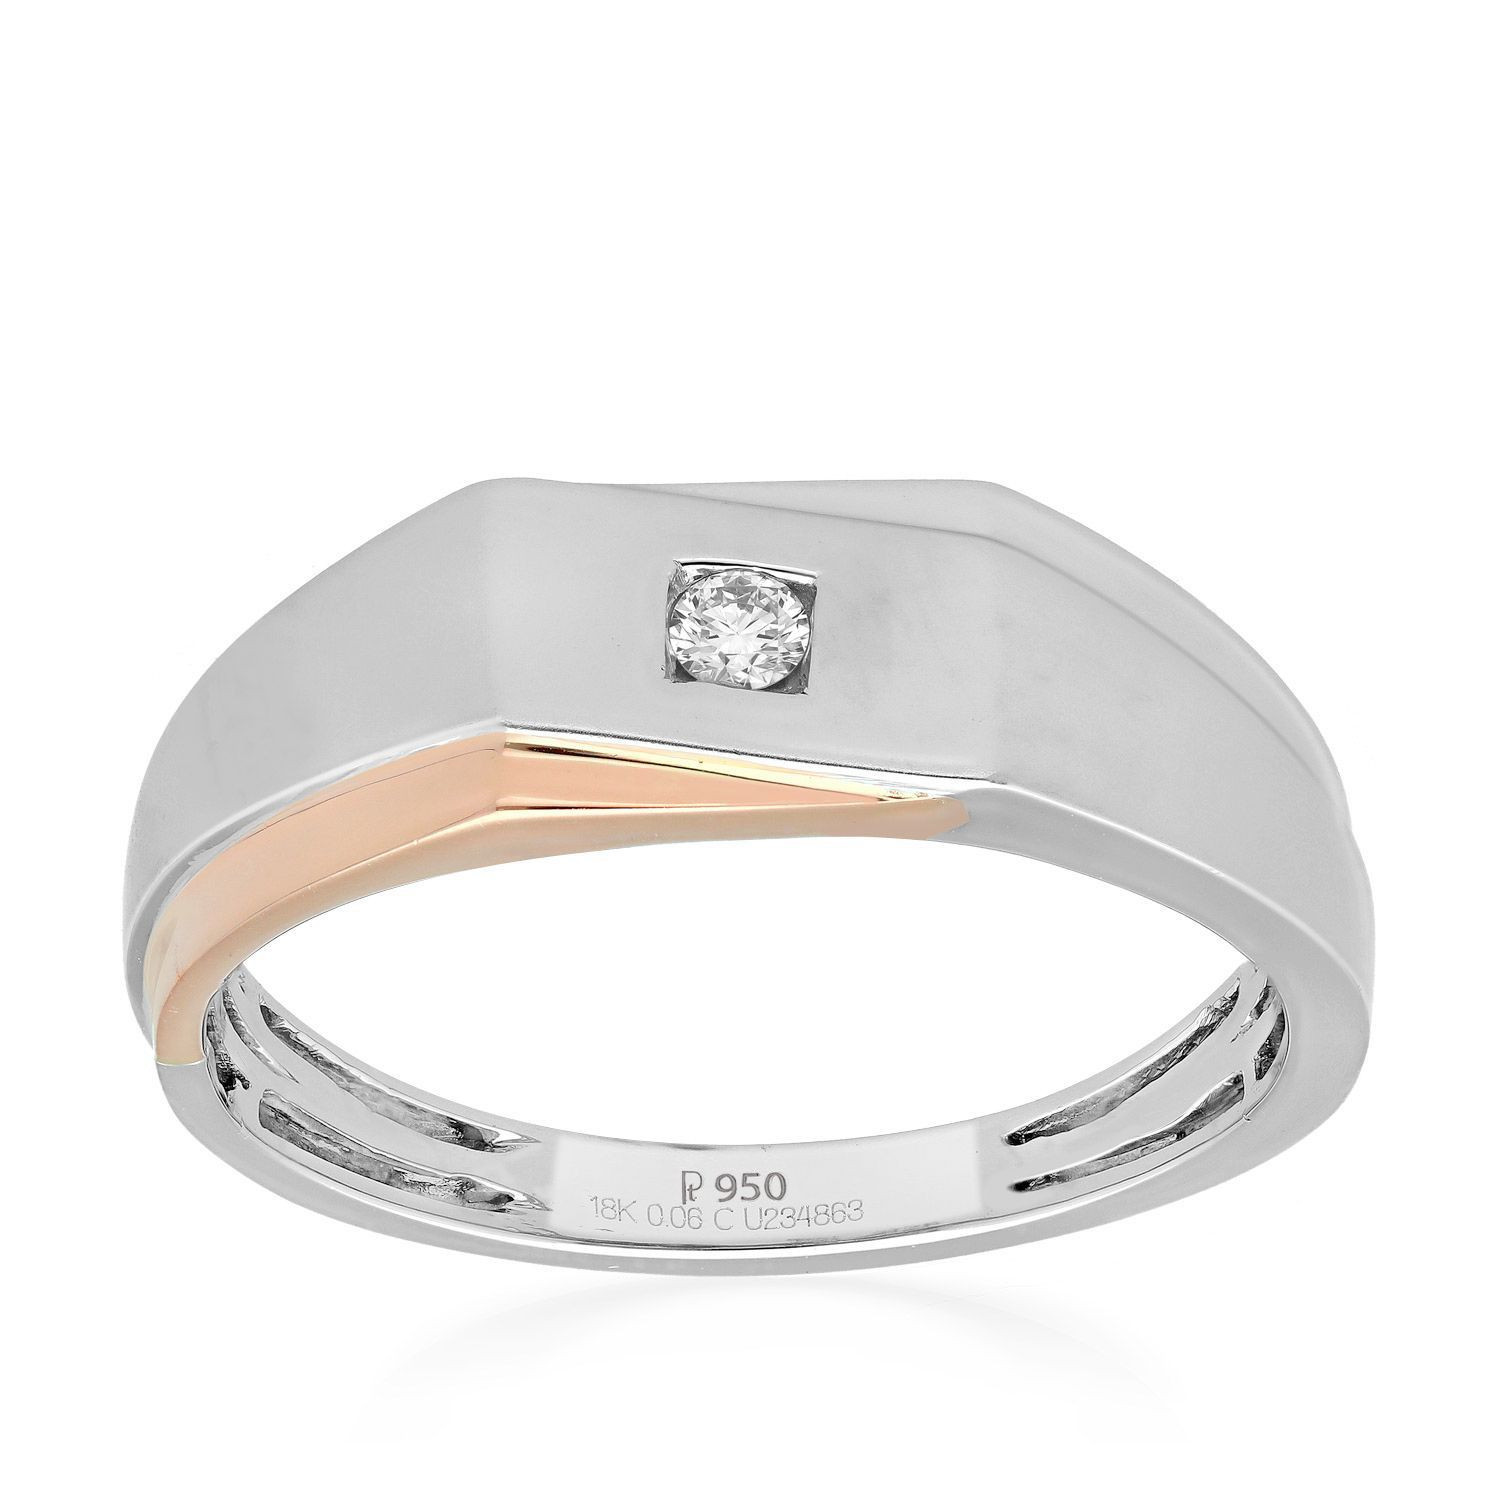 marlary latest simple fancy platinum rings| Alibaba.com